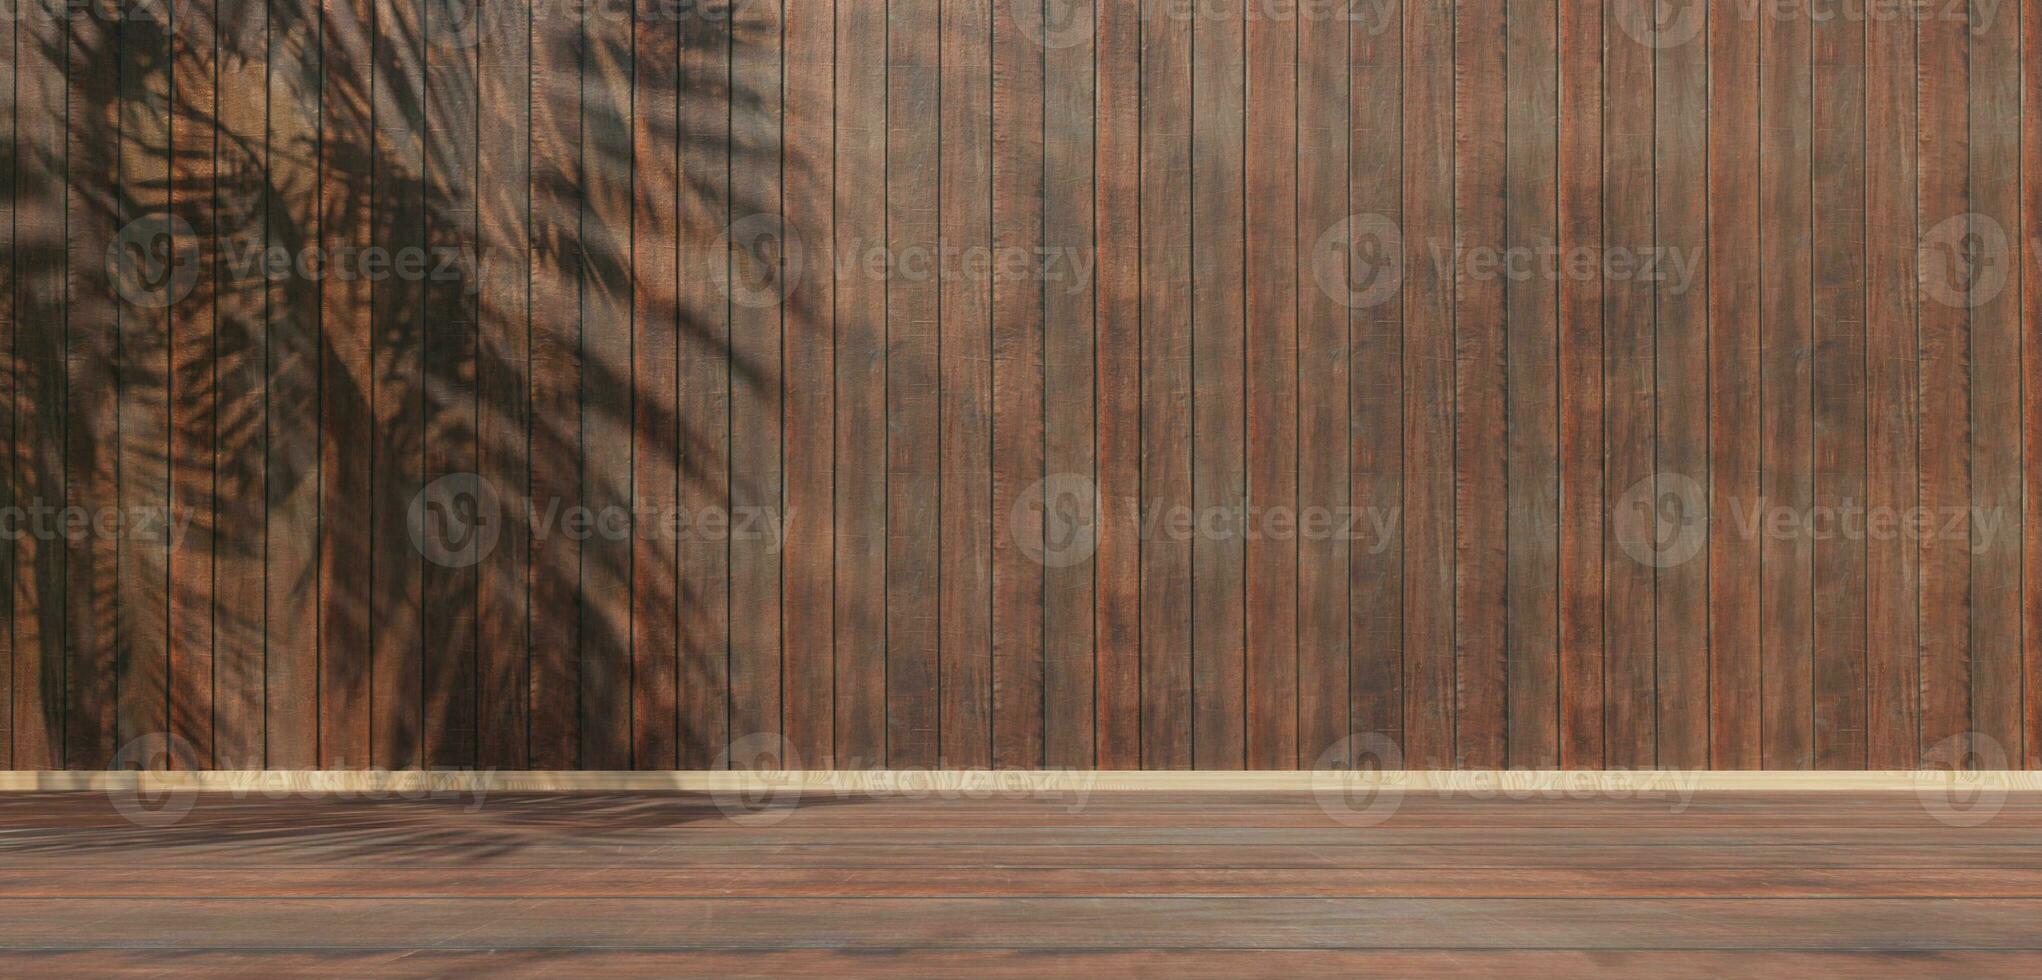 antecedentes madera escena madera grano madera piso madera pared grunge 3d ilustración foto